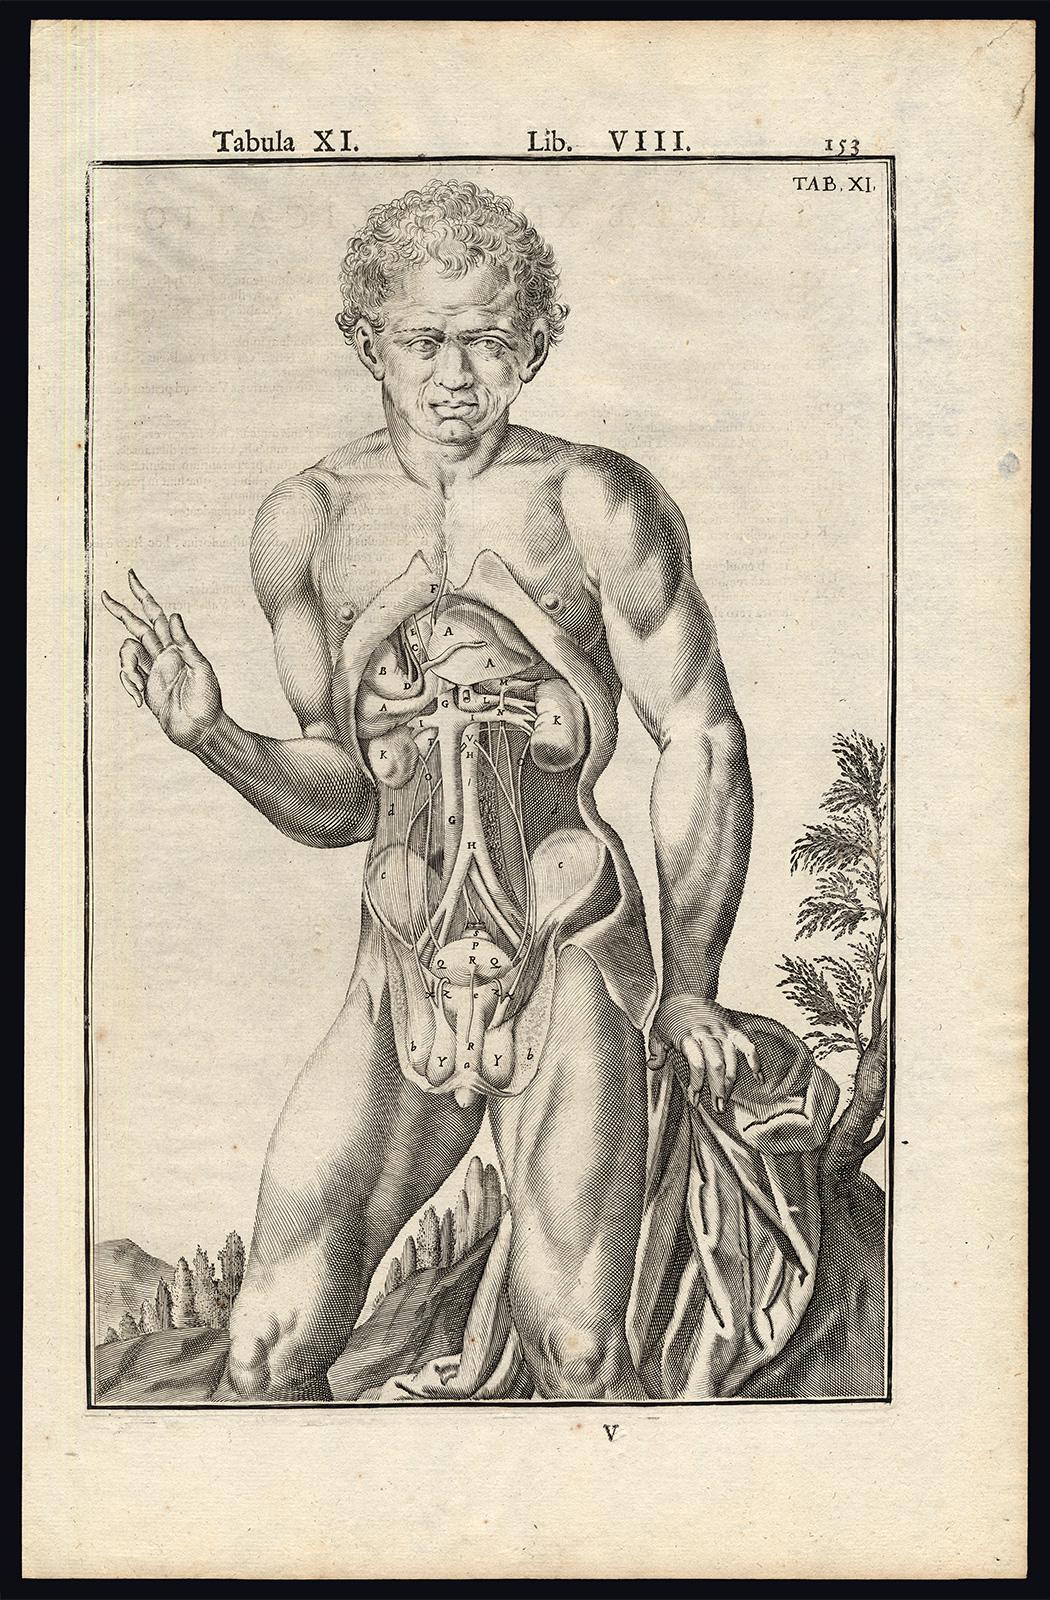 Adrianus Spigelius Print - 2 anatomical prints - Male organs by Spigelius - Engraving - 17th century